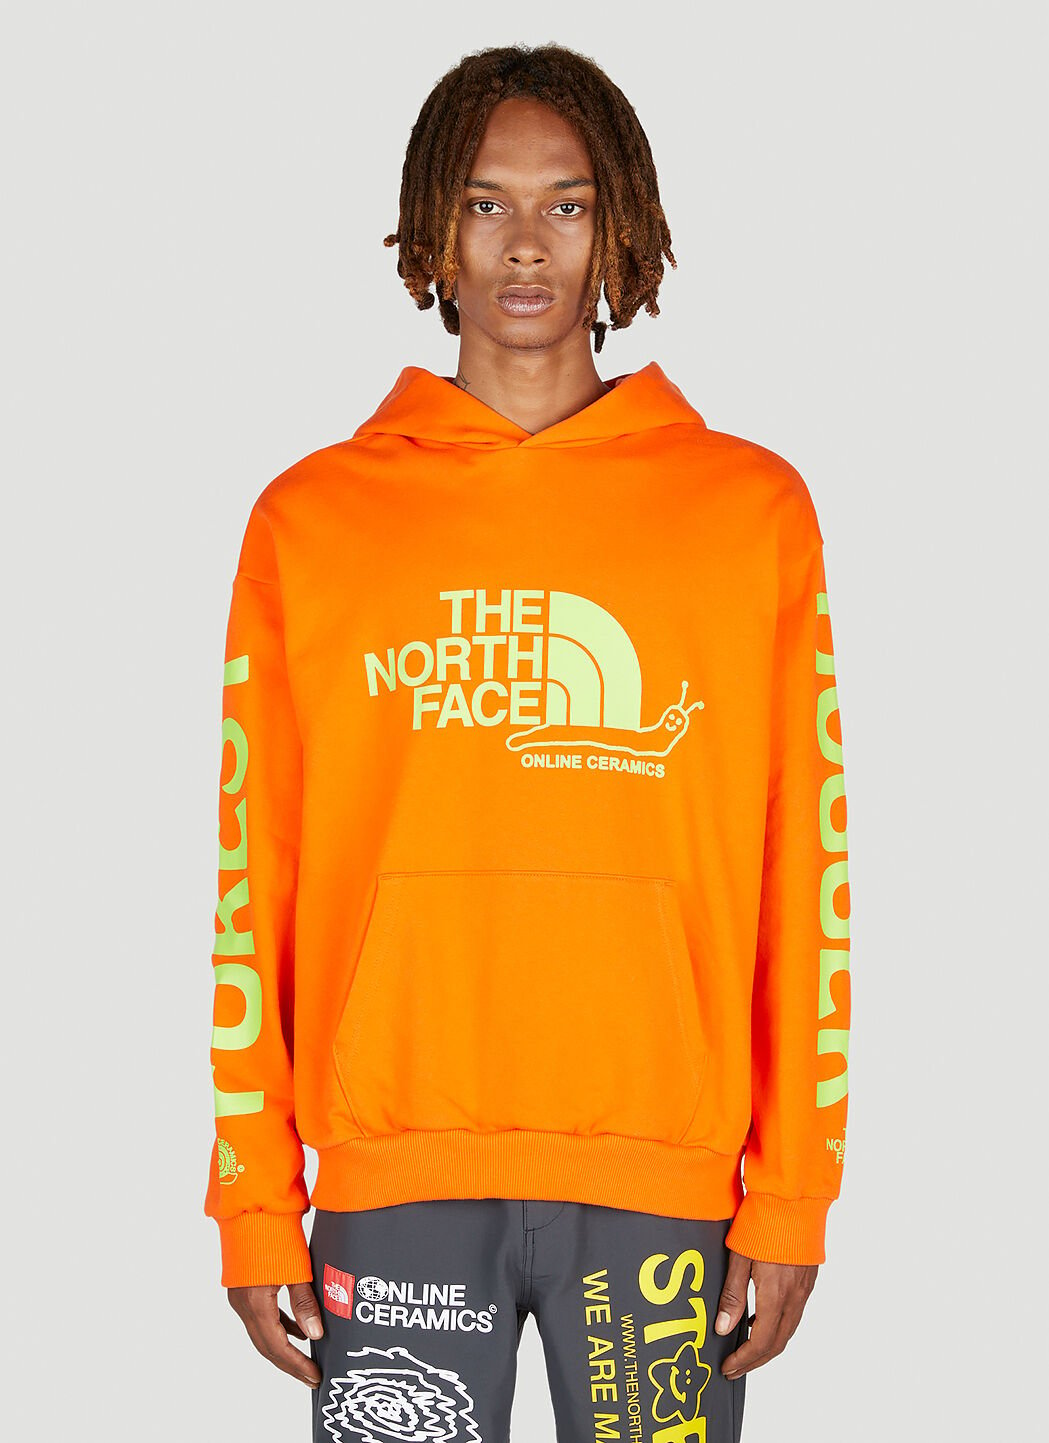 The North Face x Online Ceramics Hooded Sweatshirt in Orange | LN-CC®